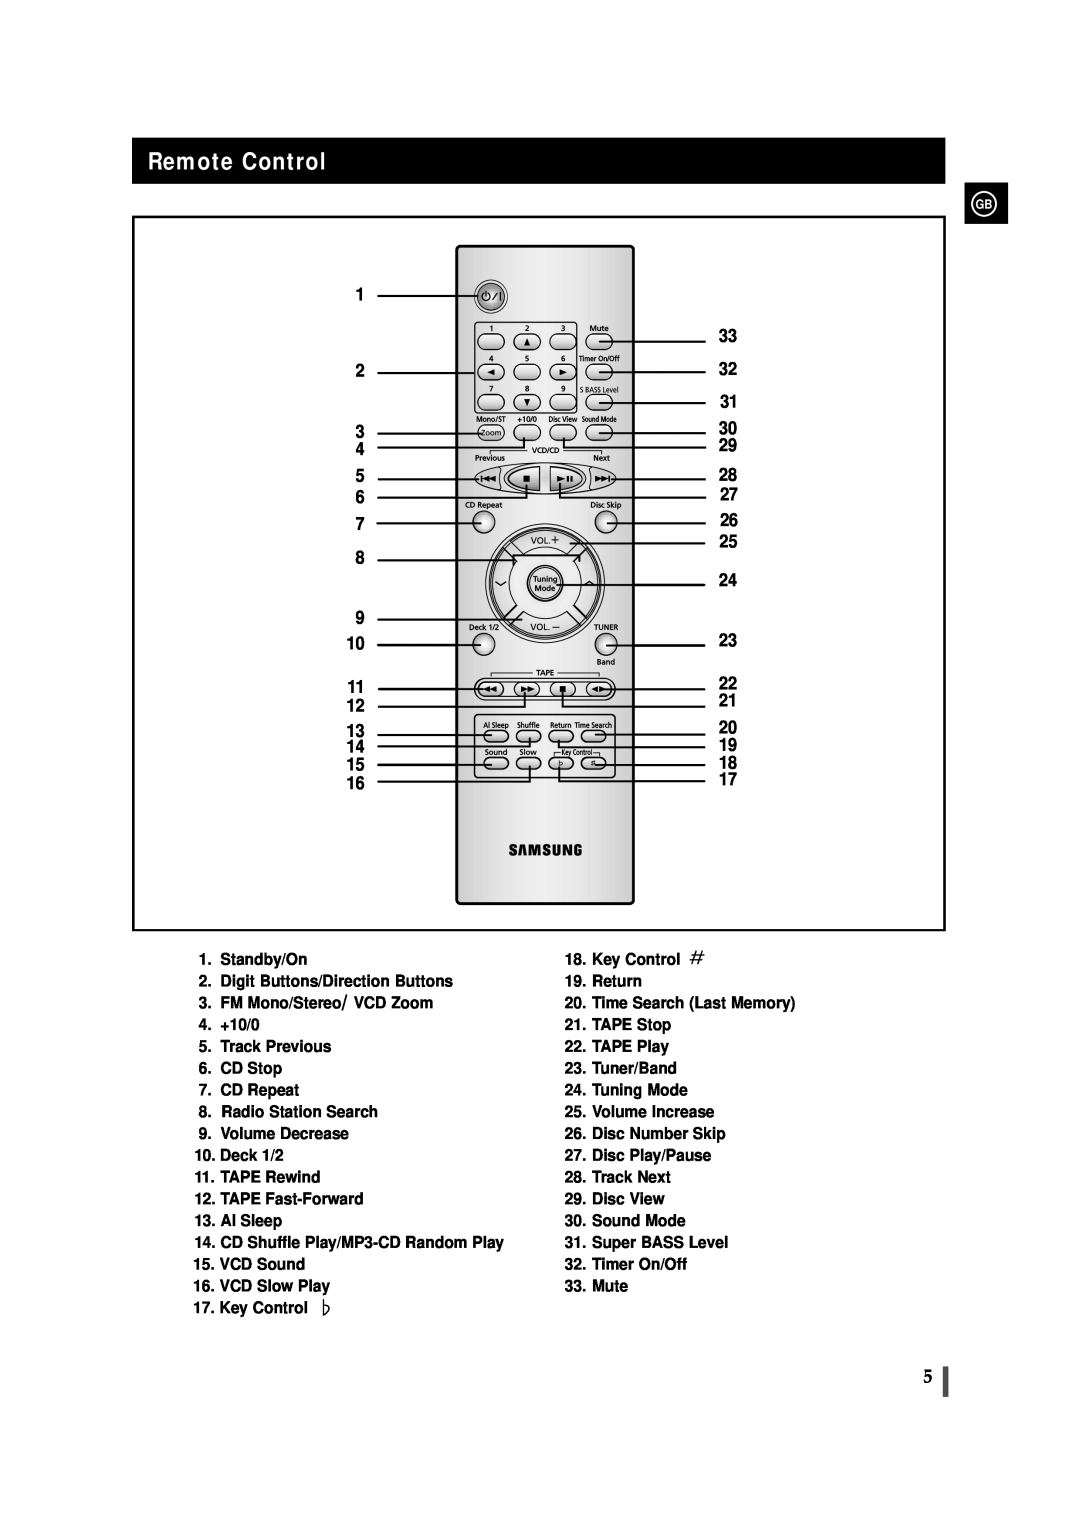 Samsung MAX-VS720 instruction manual Remote Control 